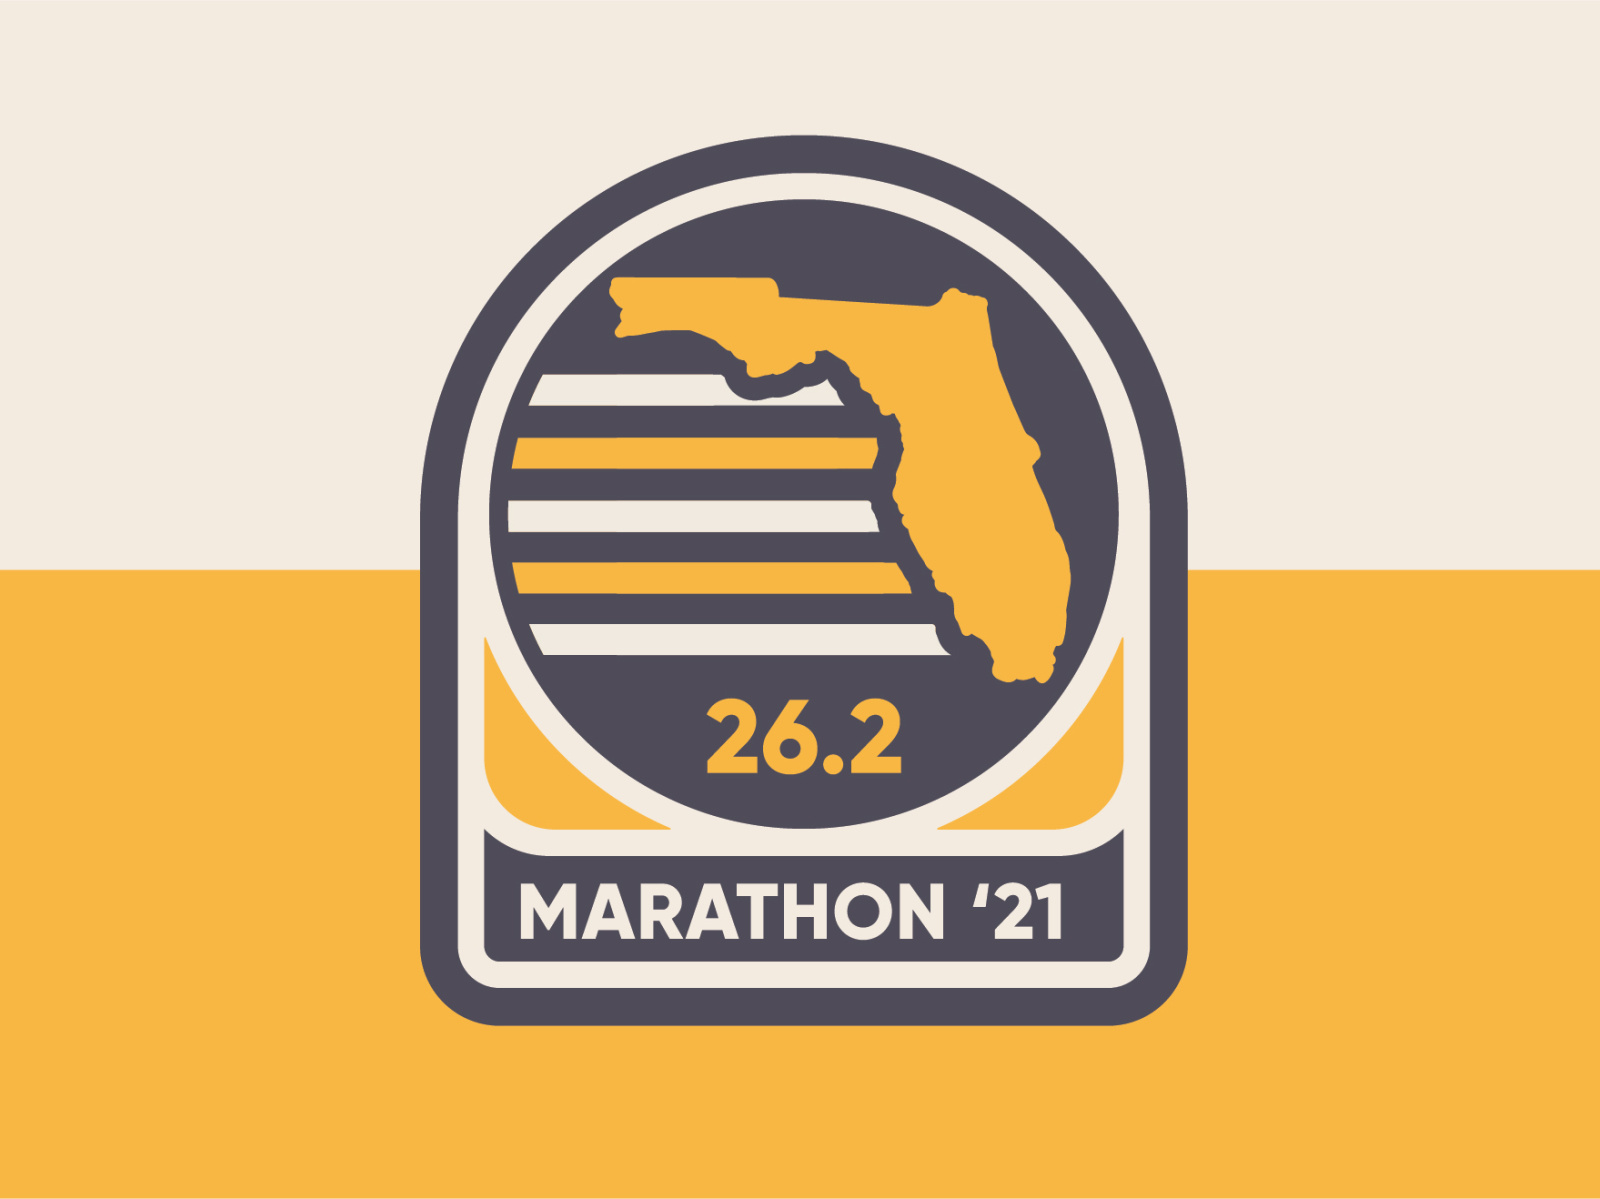 Florida Marathon 2021 by Ashley Loonam on Dribbble